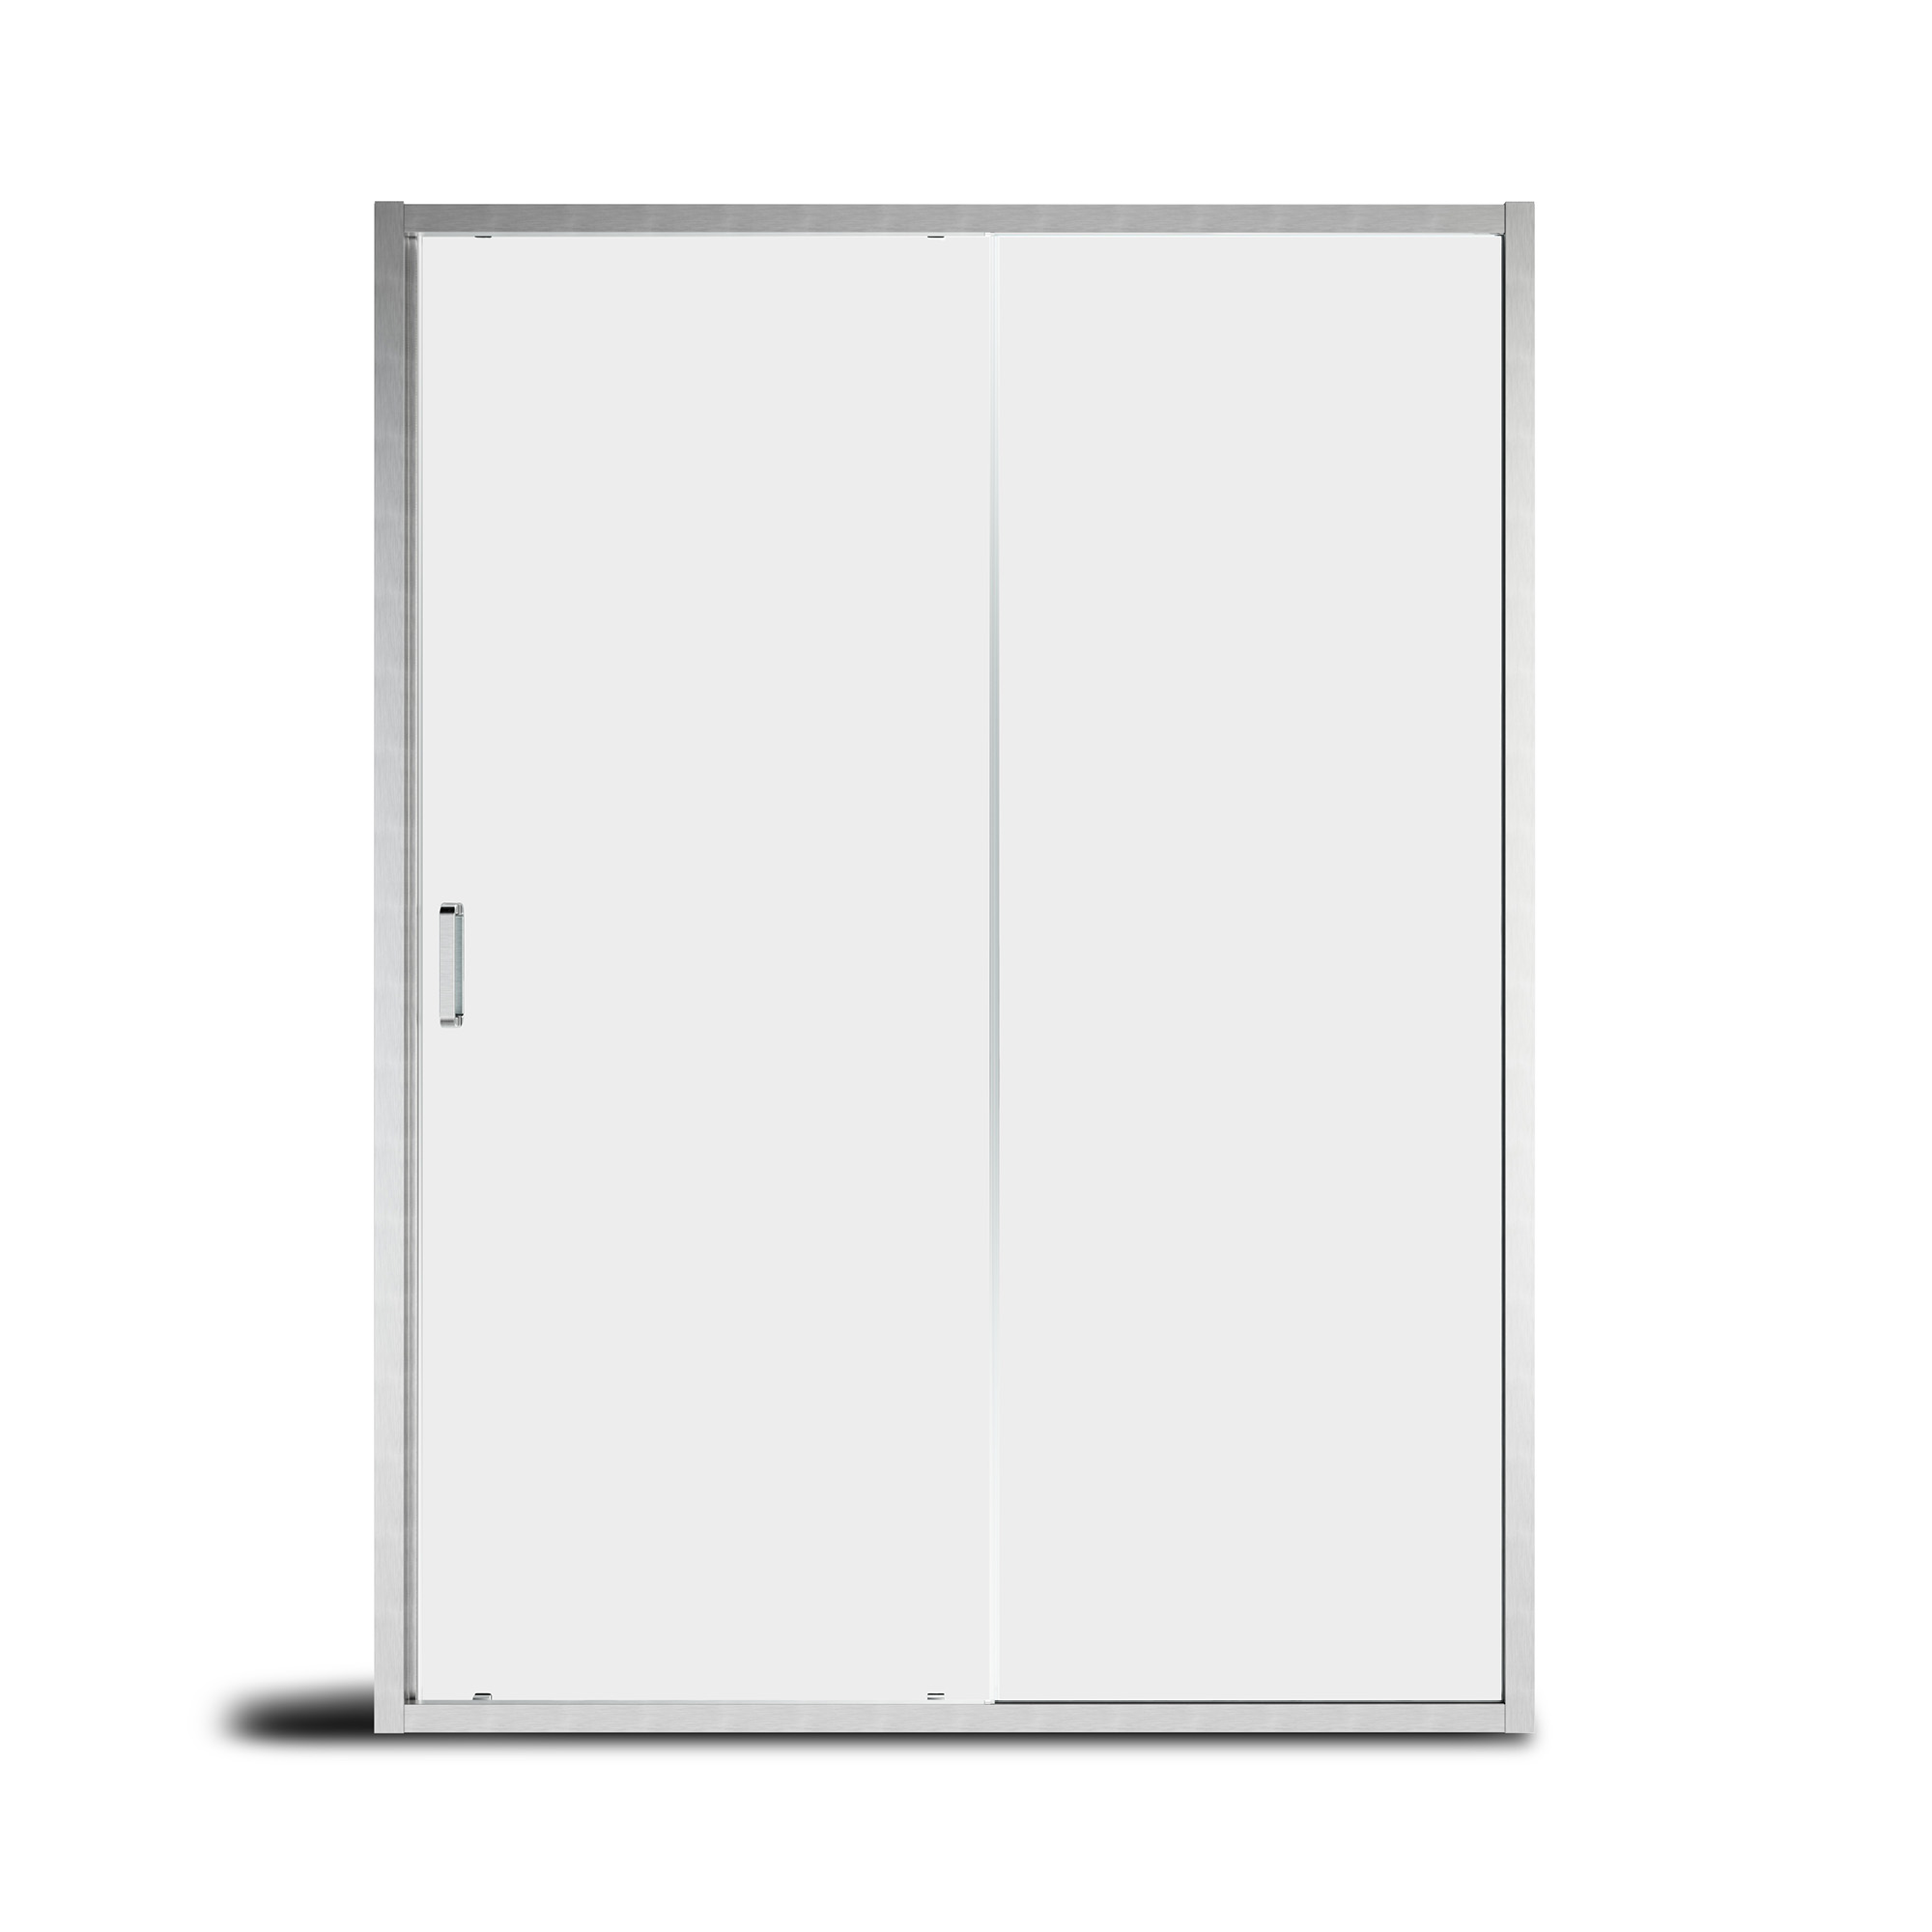 CASAINC 48 "x 72" Framed Single Sliding Shower Door in Chromed and More-Casainc Canada